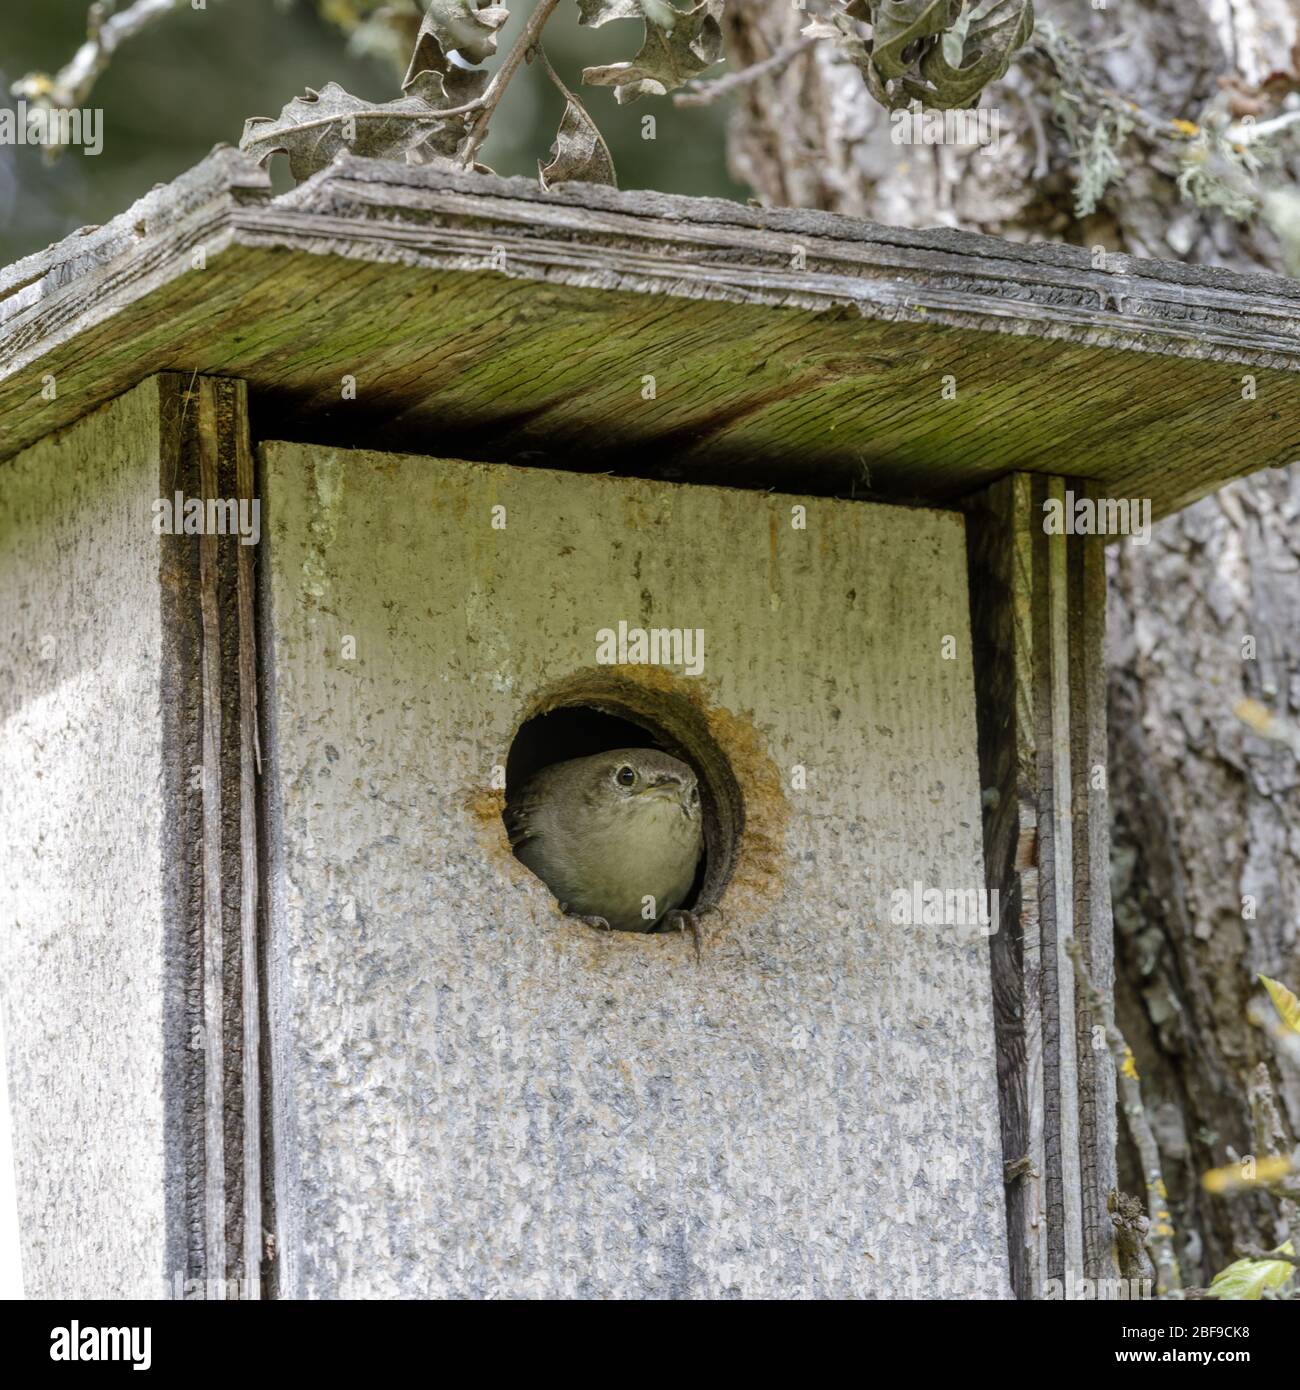 House Wren Peeking Through Its Nest Box. Stock Photo